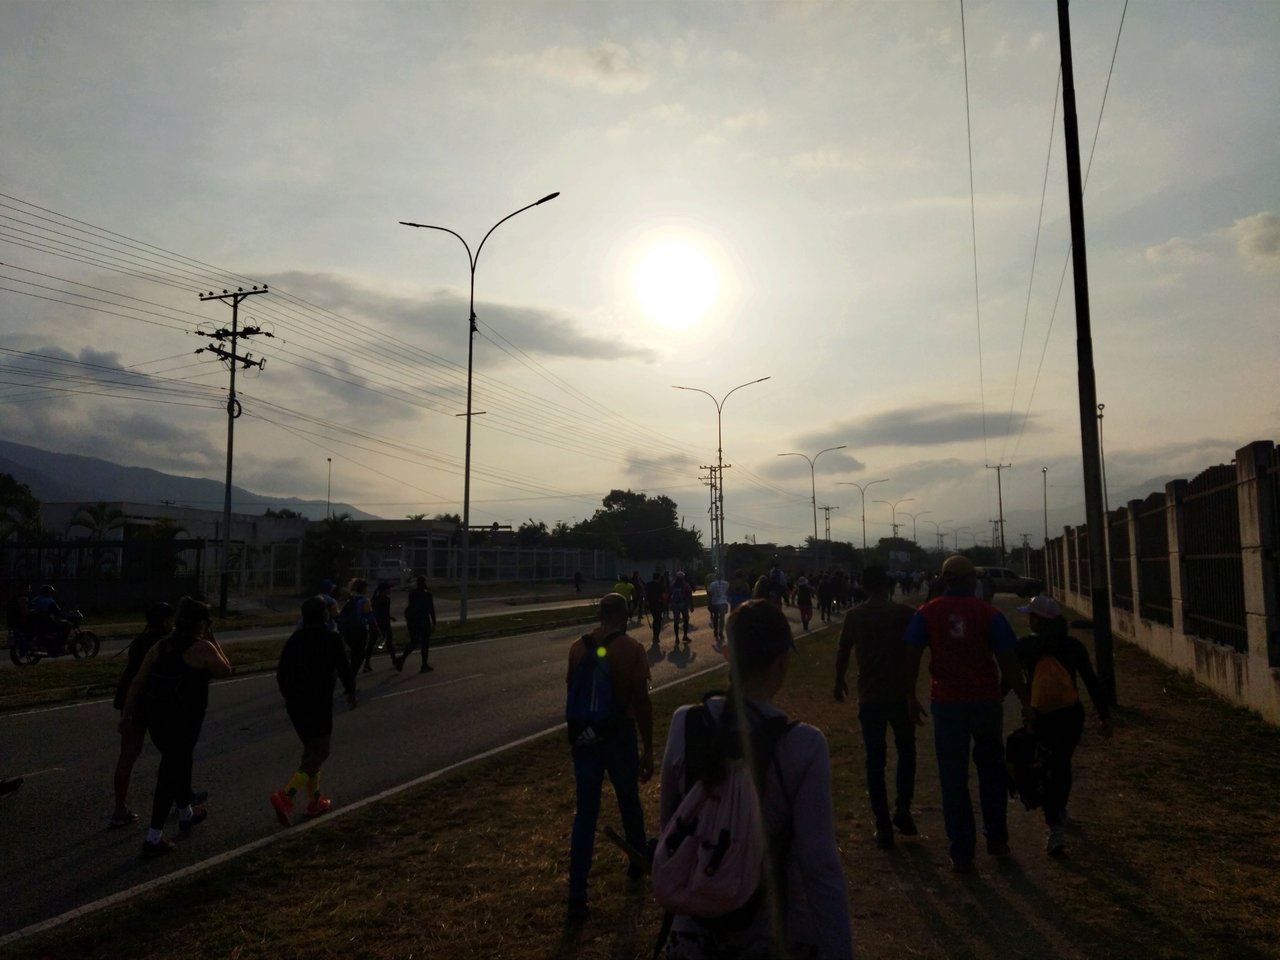 2do Encuentro de caminantes y senderistas de Aragua (Venezuela), 15 kms ⛰️🌳🏃🏻‍♀️ / 2nd Meeting of walkers and hikers of Aragua (Venezuela), 15 km ⛰️🌳🏃🏻‍♀️ 